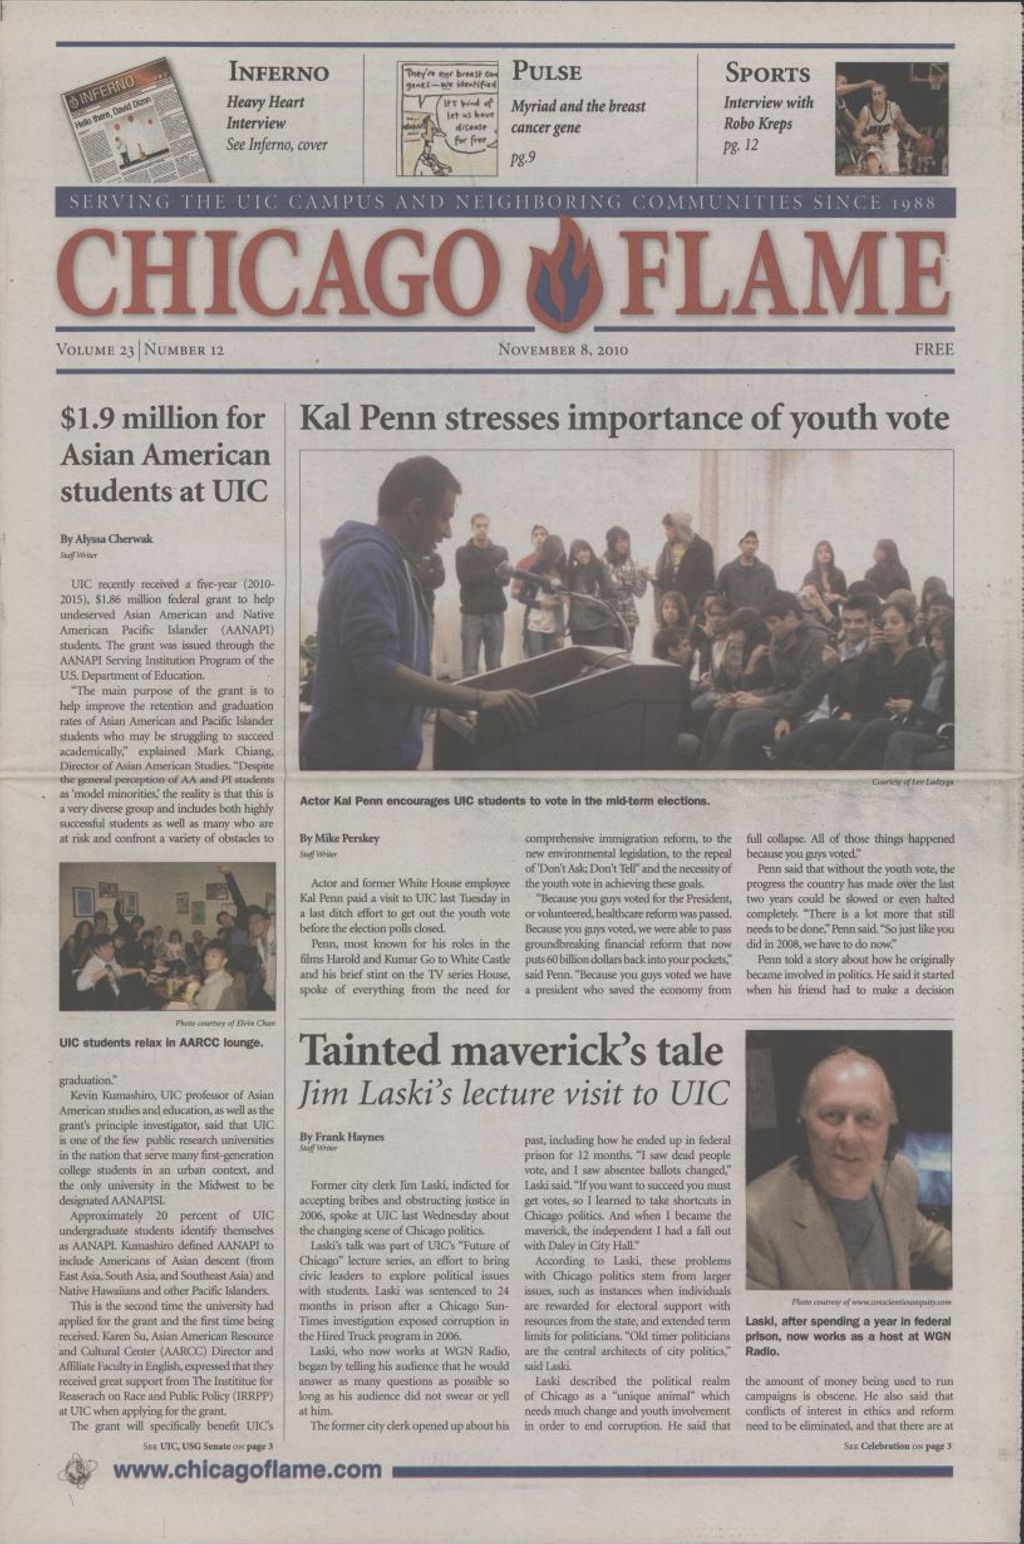 Miniature of Chicago Flame (November 8, 2010)